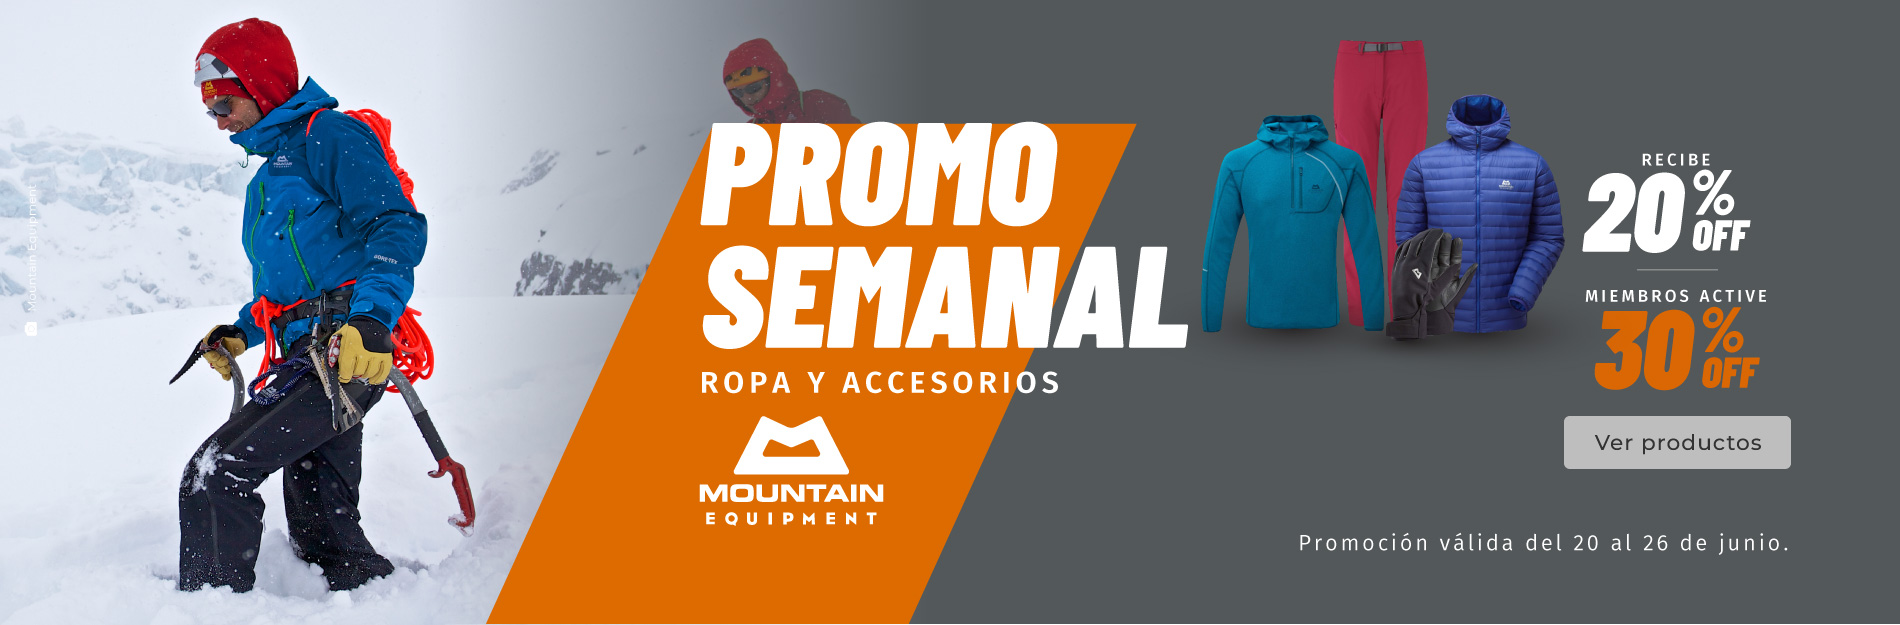 Promo semanal Chile: ropa y accesorios Mountain Equipment.